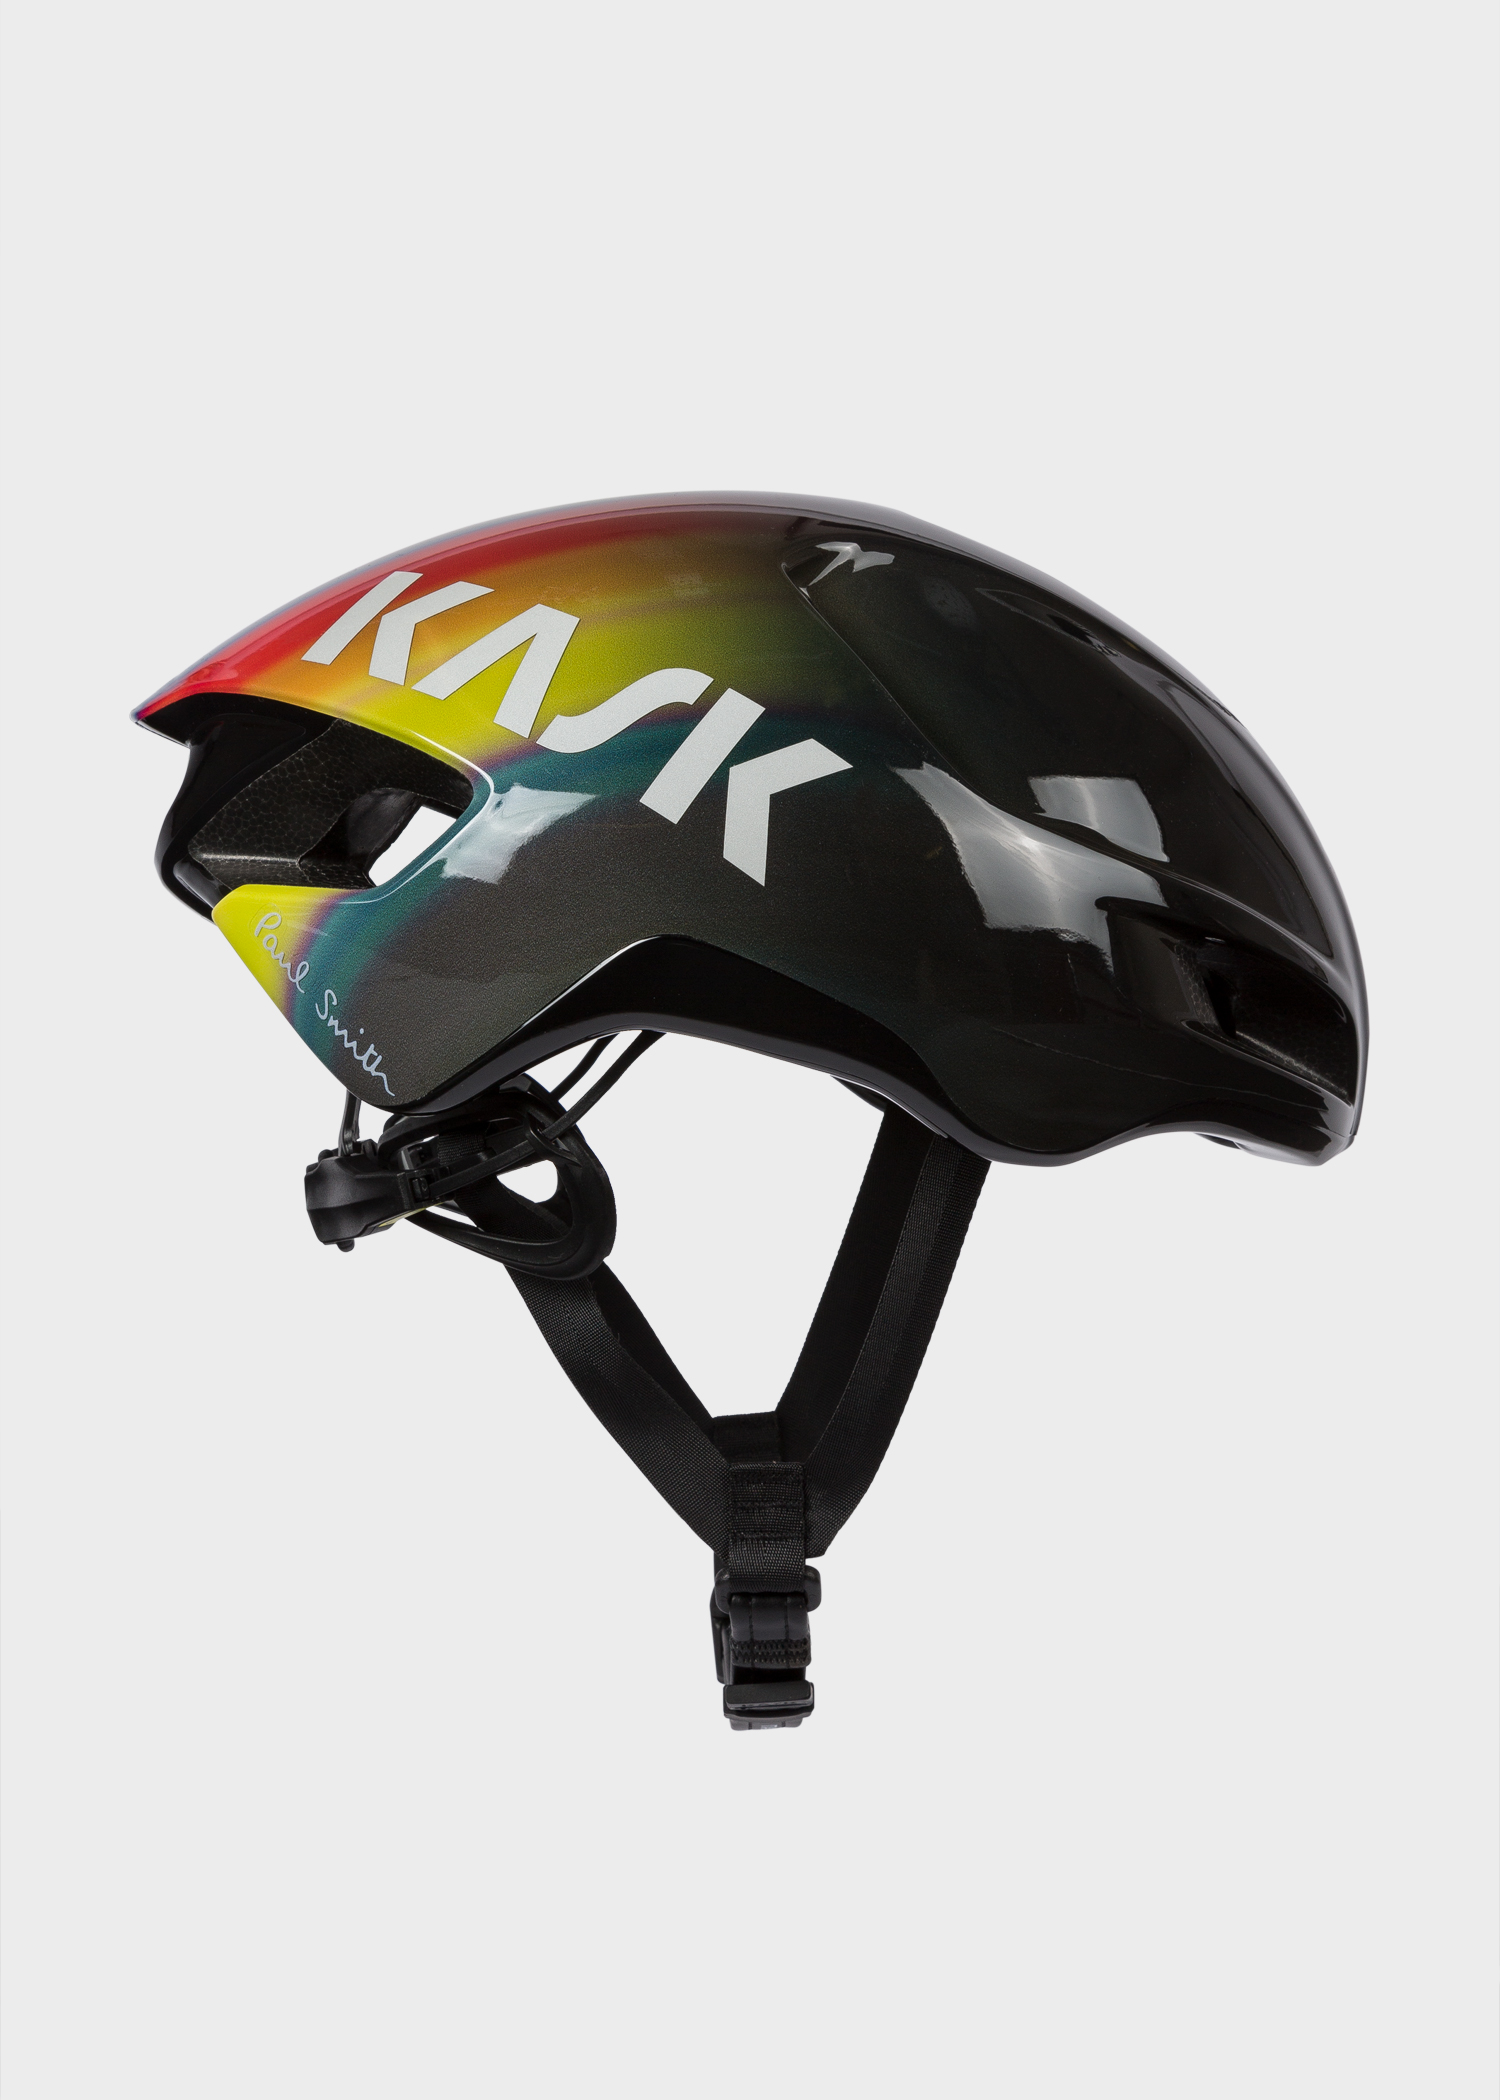 Side view - Paul Smith + Kask 'Rainbow Stripe' Utopia US Cycling Helmet